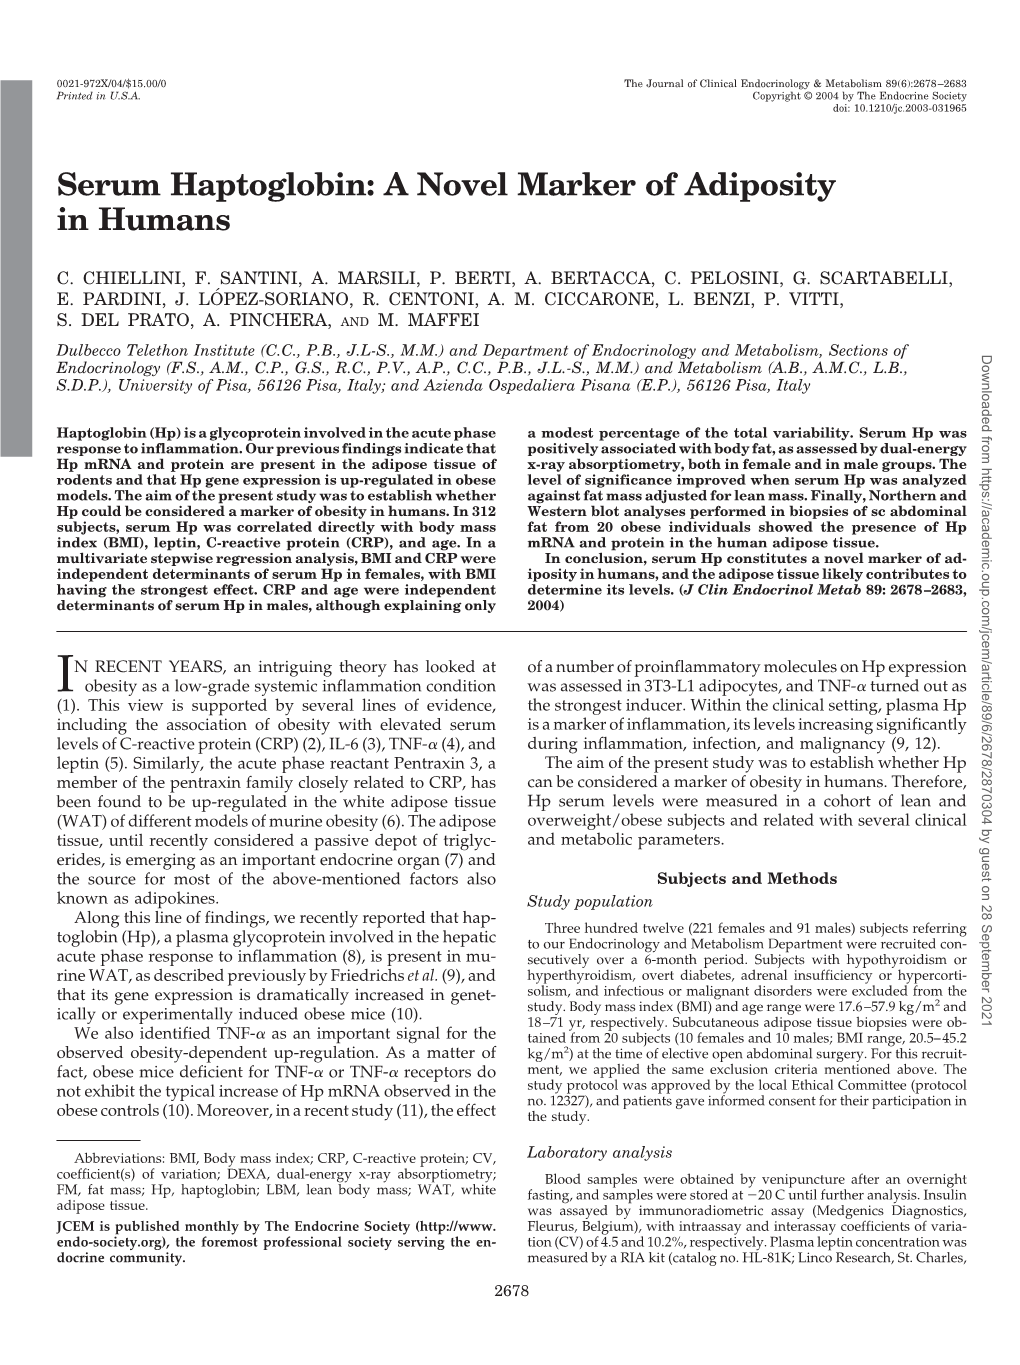 Serum Haptoglobin: a Novel Marker of Adiposity in Humans